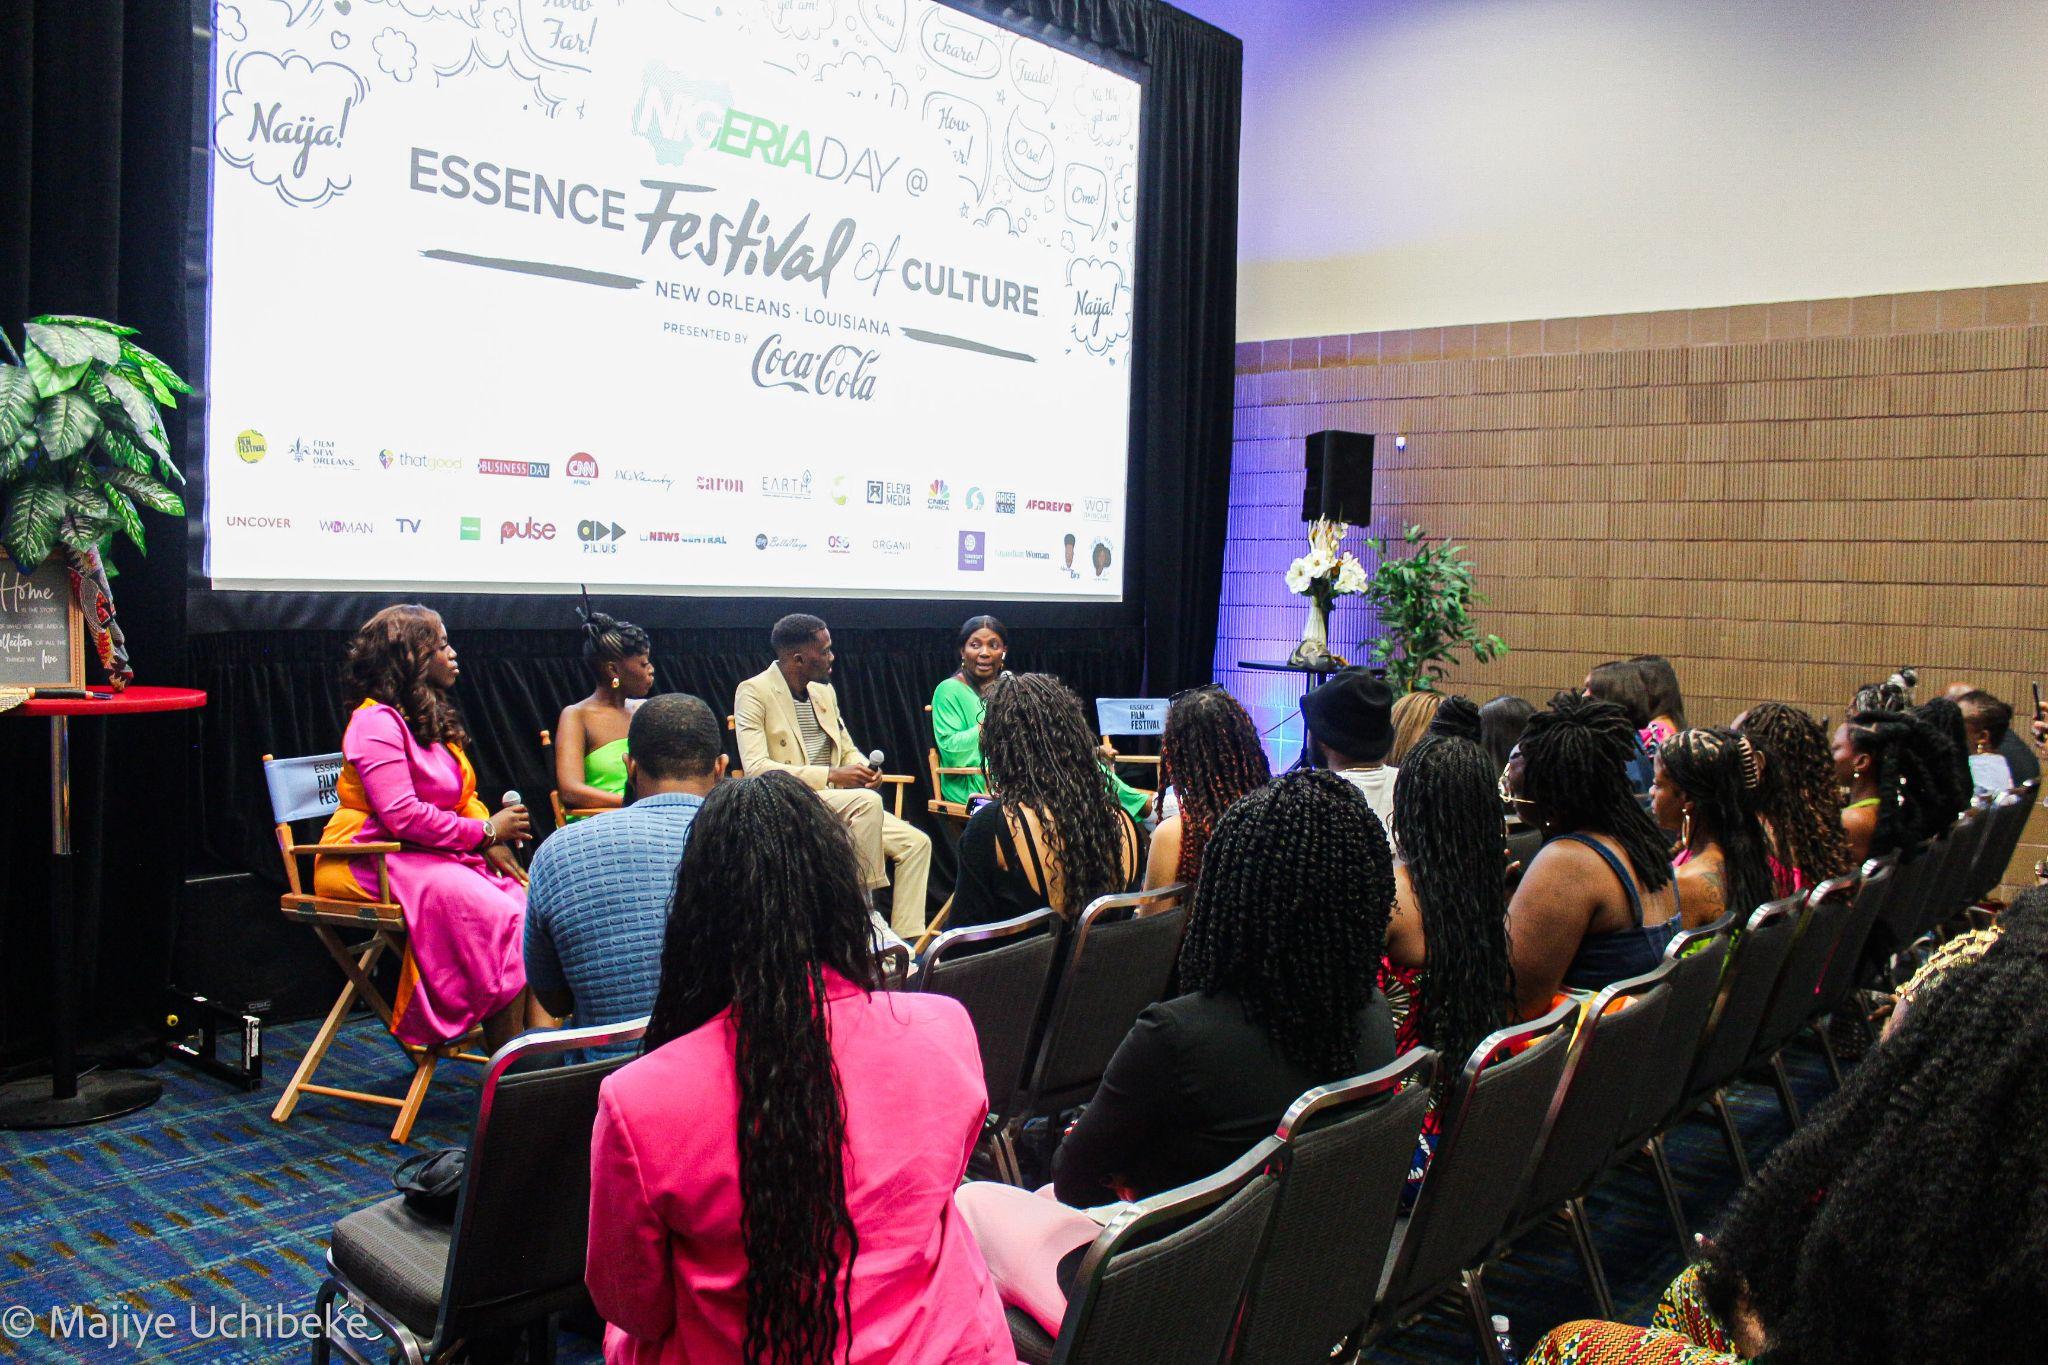 A Triumph for Nigerian Cinema: Recap of Nigeria Day at Essence Film Festival